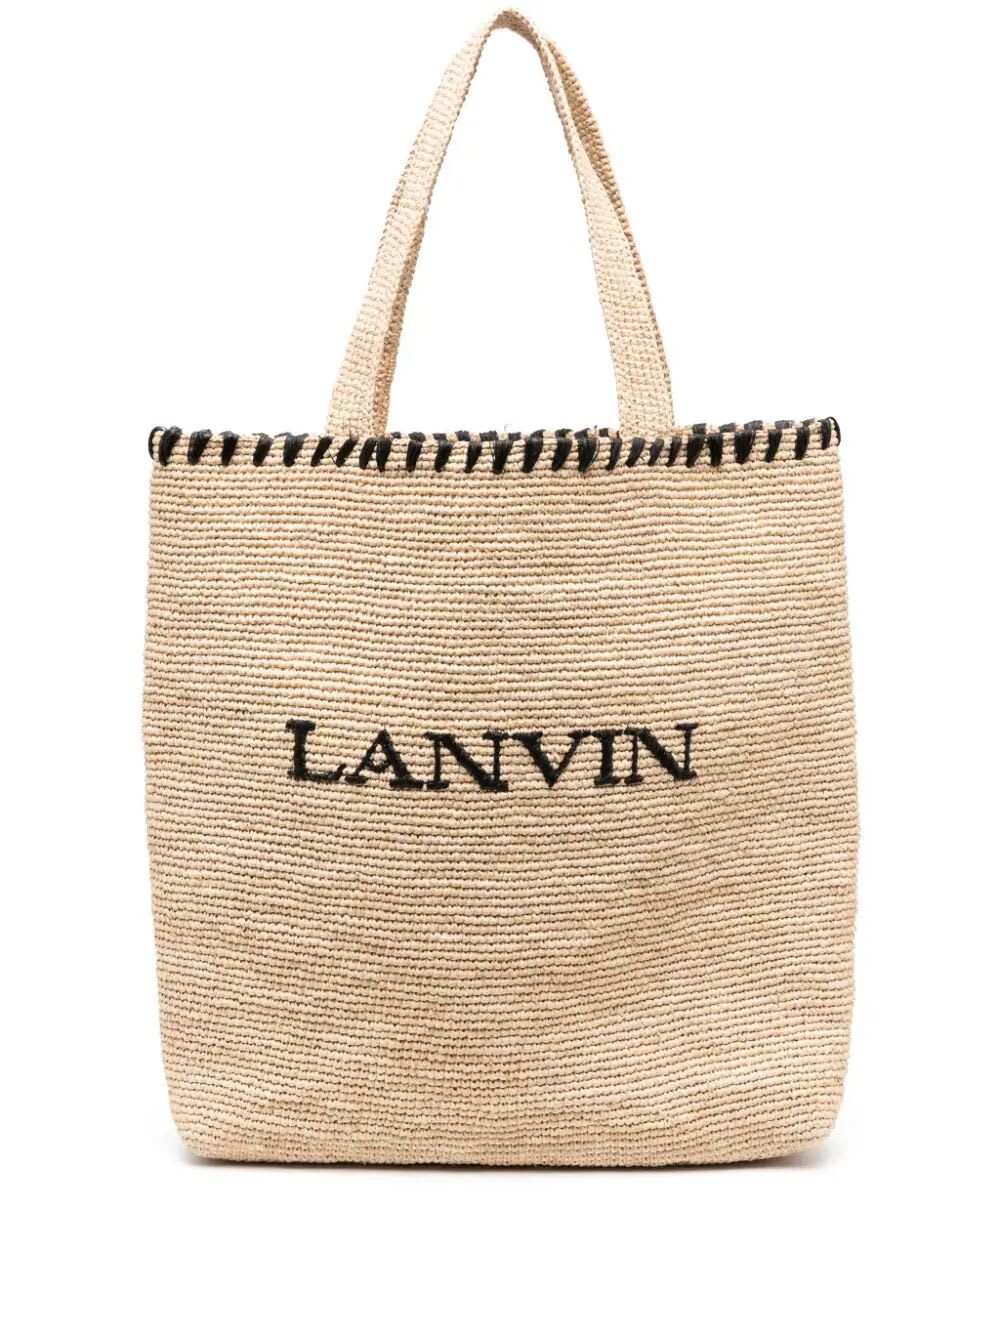 Lanvin Tote Bag In Natural Black